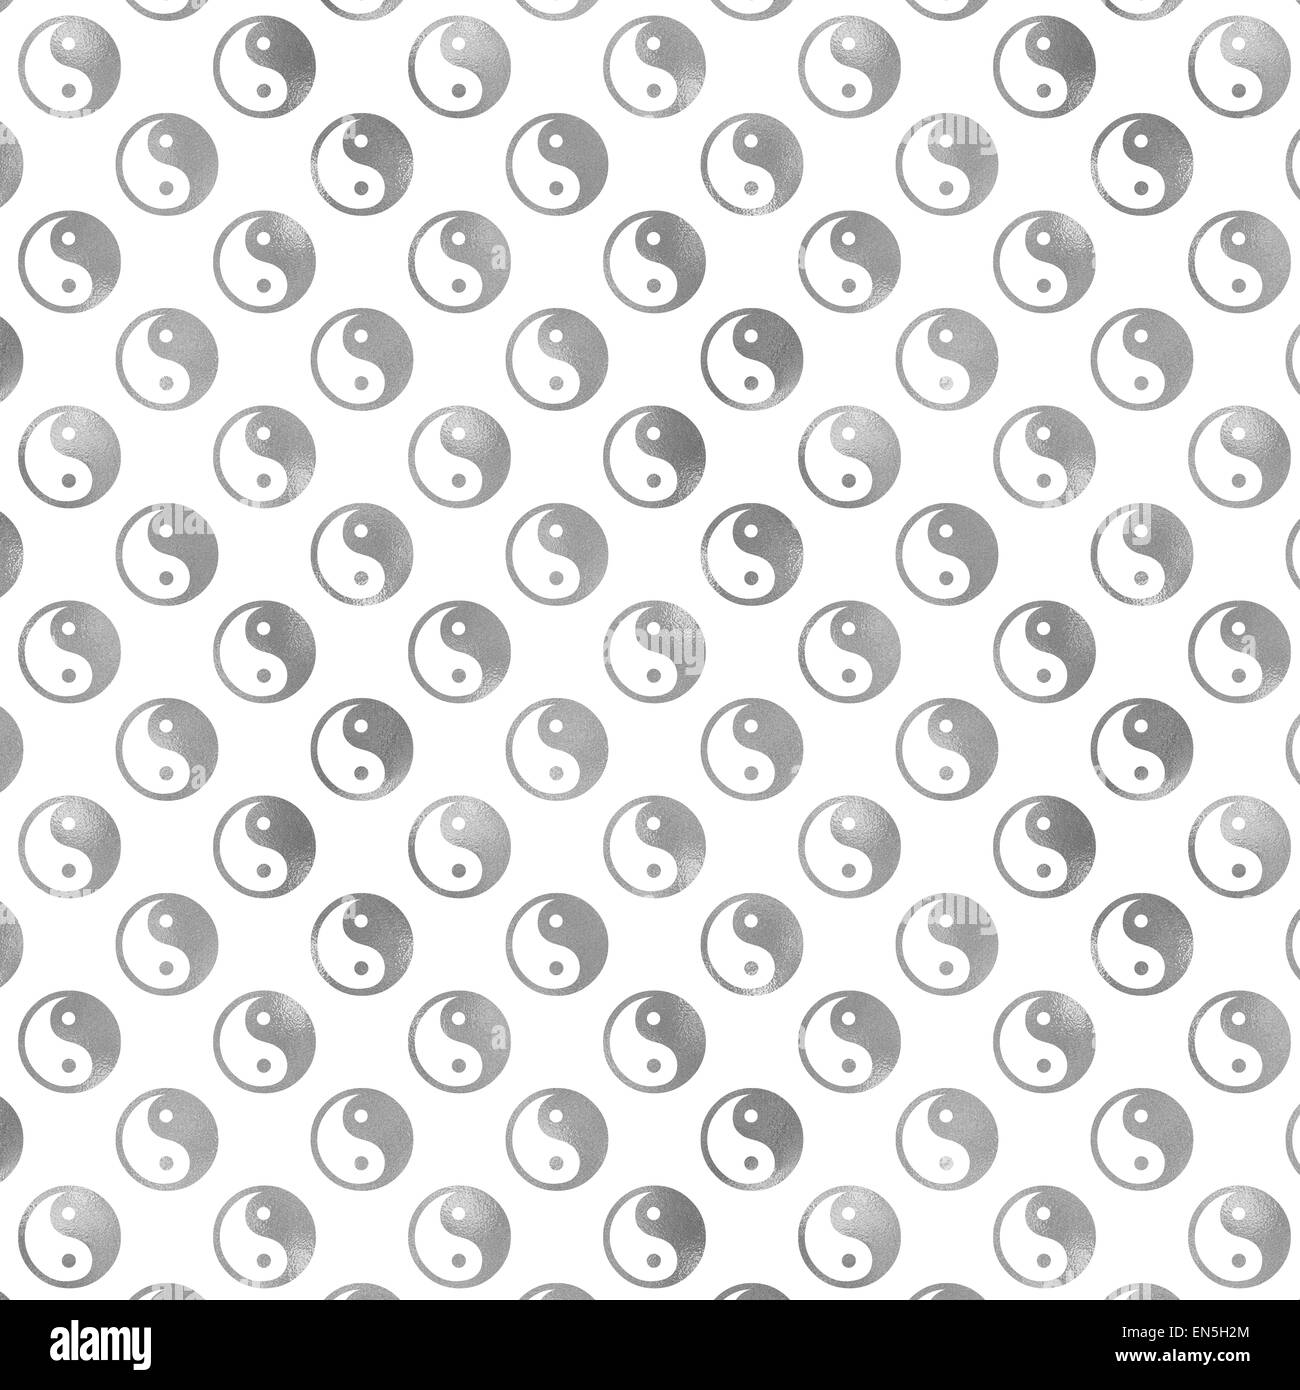 Silver Gray Faux Foil Yin Yang Metallic Taoism Balance Chinese Tao Symbol Background Texture Pattern Stock Photo